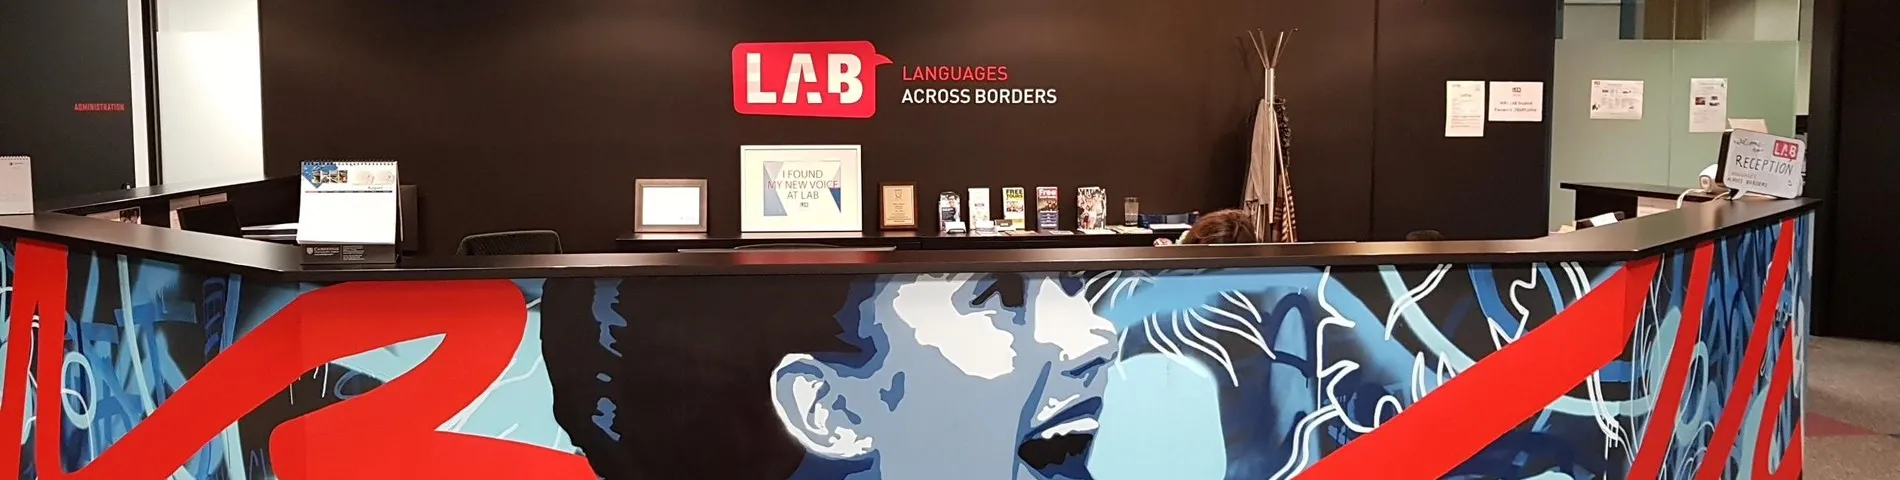 LAB - Languages Across Borders resim 1